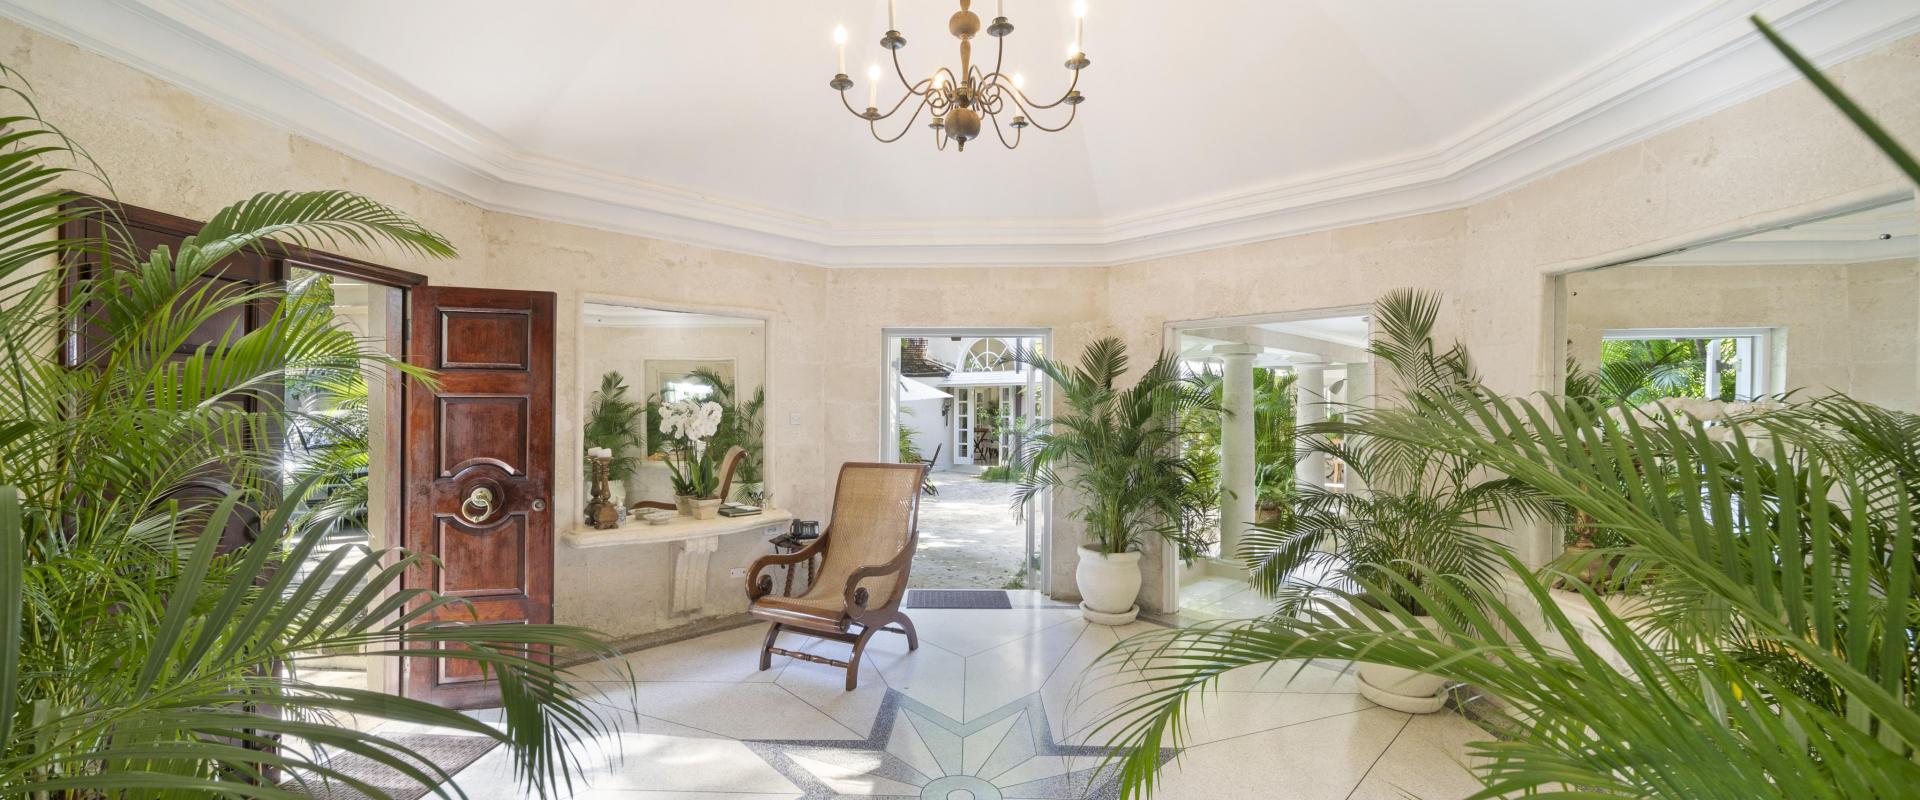 Heronetta Sandy Lane Estate Barbados Entrance Foyer